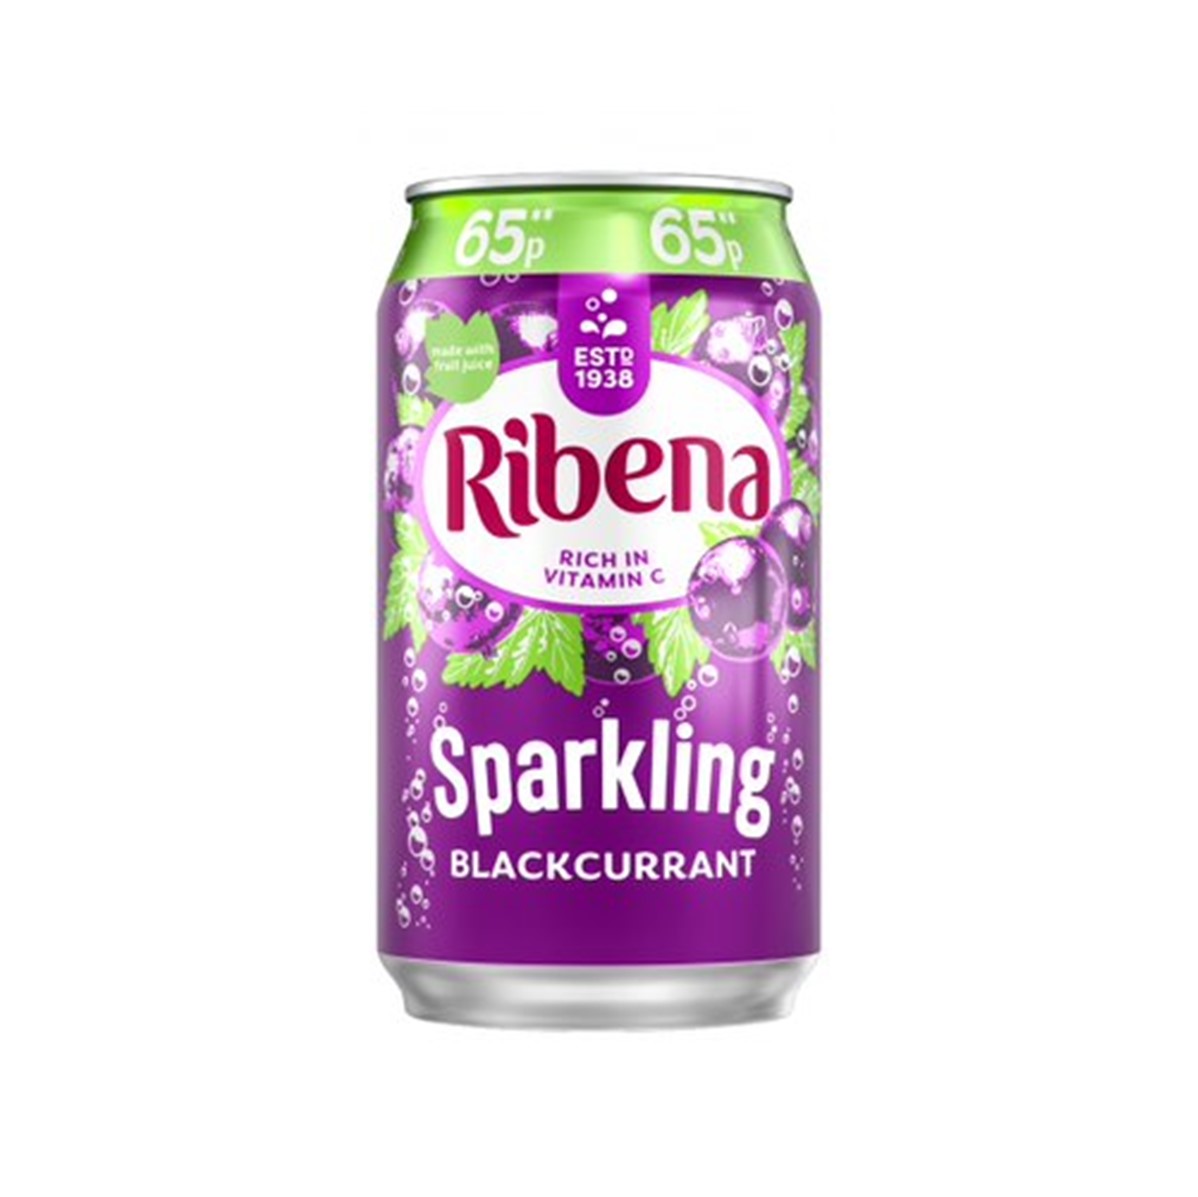 Ribena Sparkling Blackcurrant - 24x330ml cans